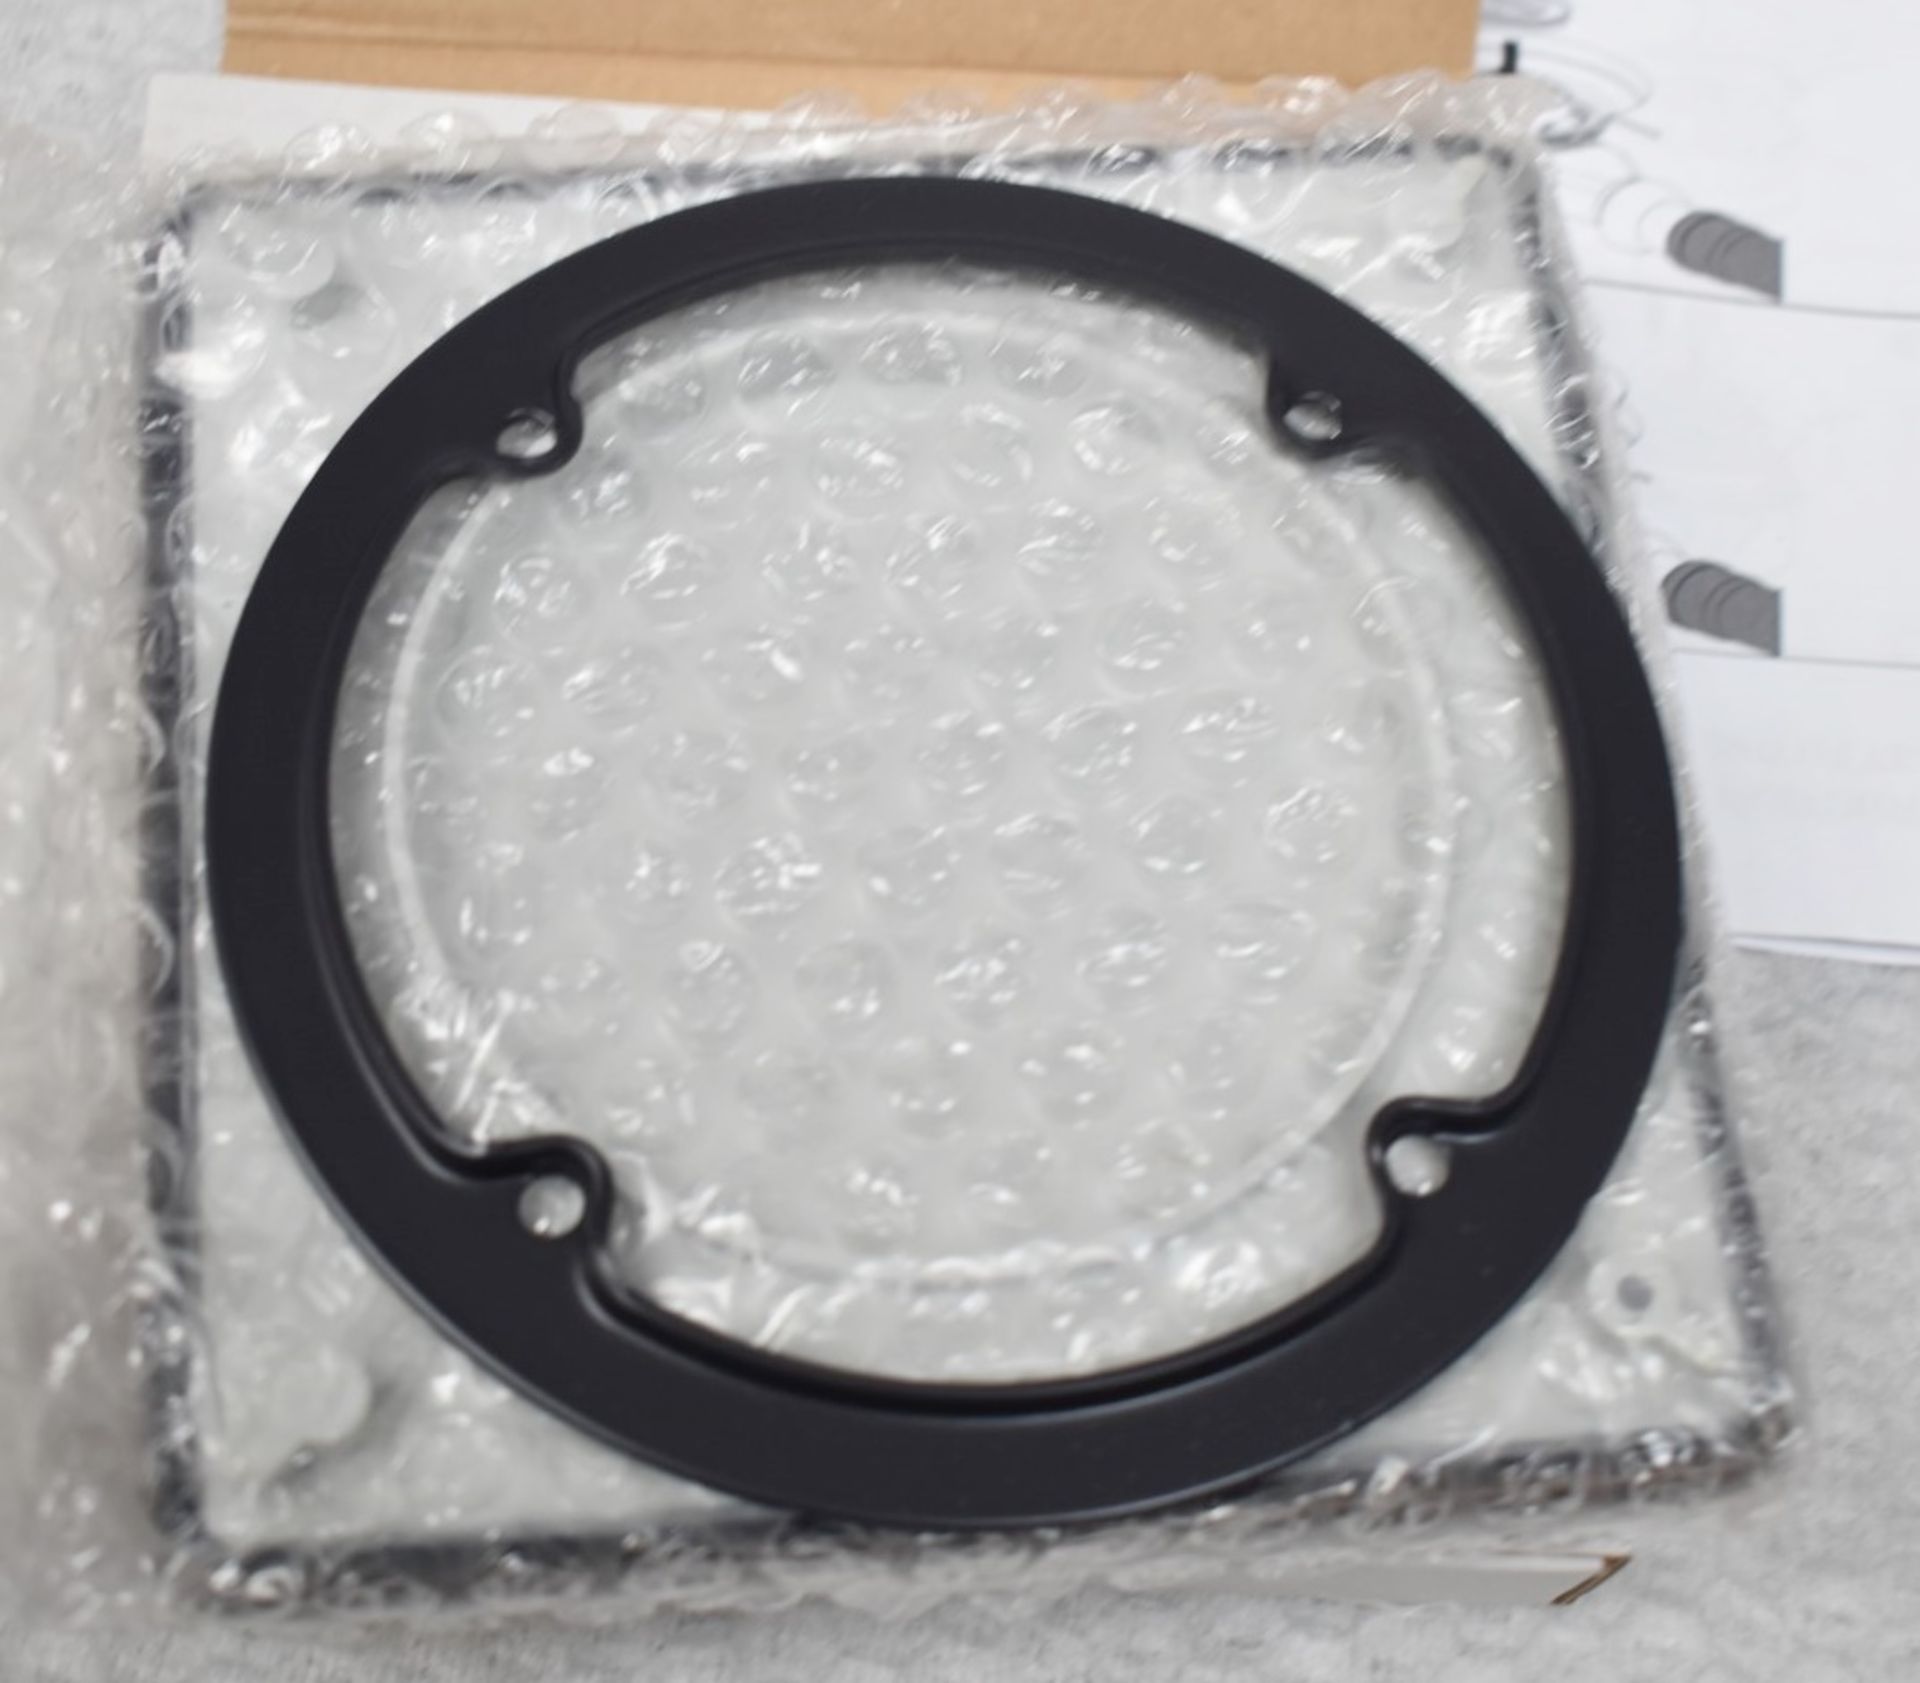 1 x KALDEWEI 'Conoflat' Enameled Horizontal Shower Waste Fitting, In Woodberry Matt Brown (Mod.4091) - Image 6 of 8